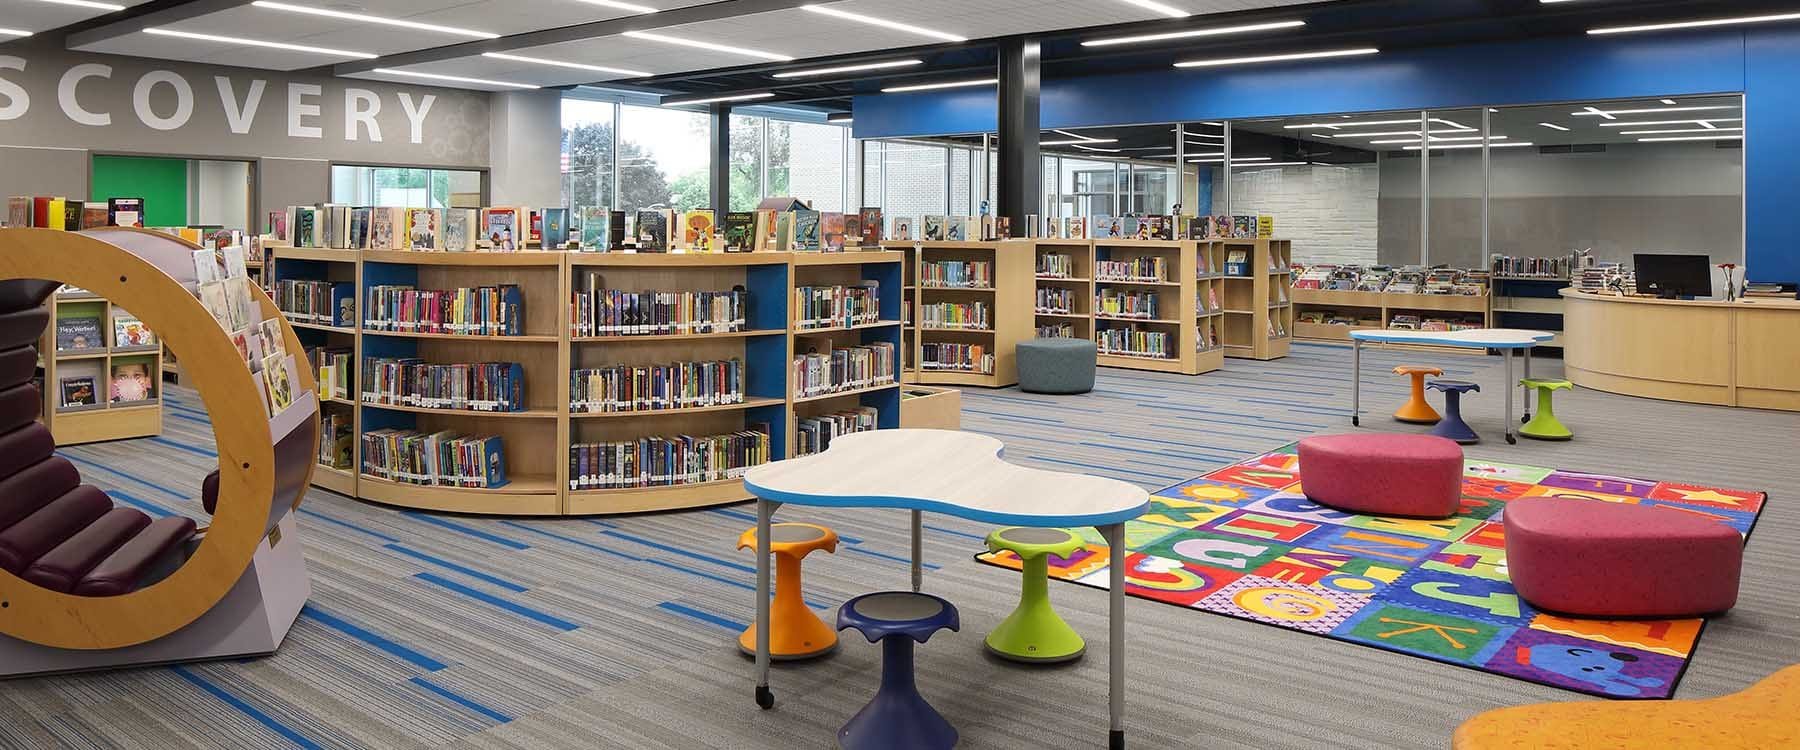 McKinley Elementary School Library